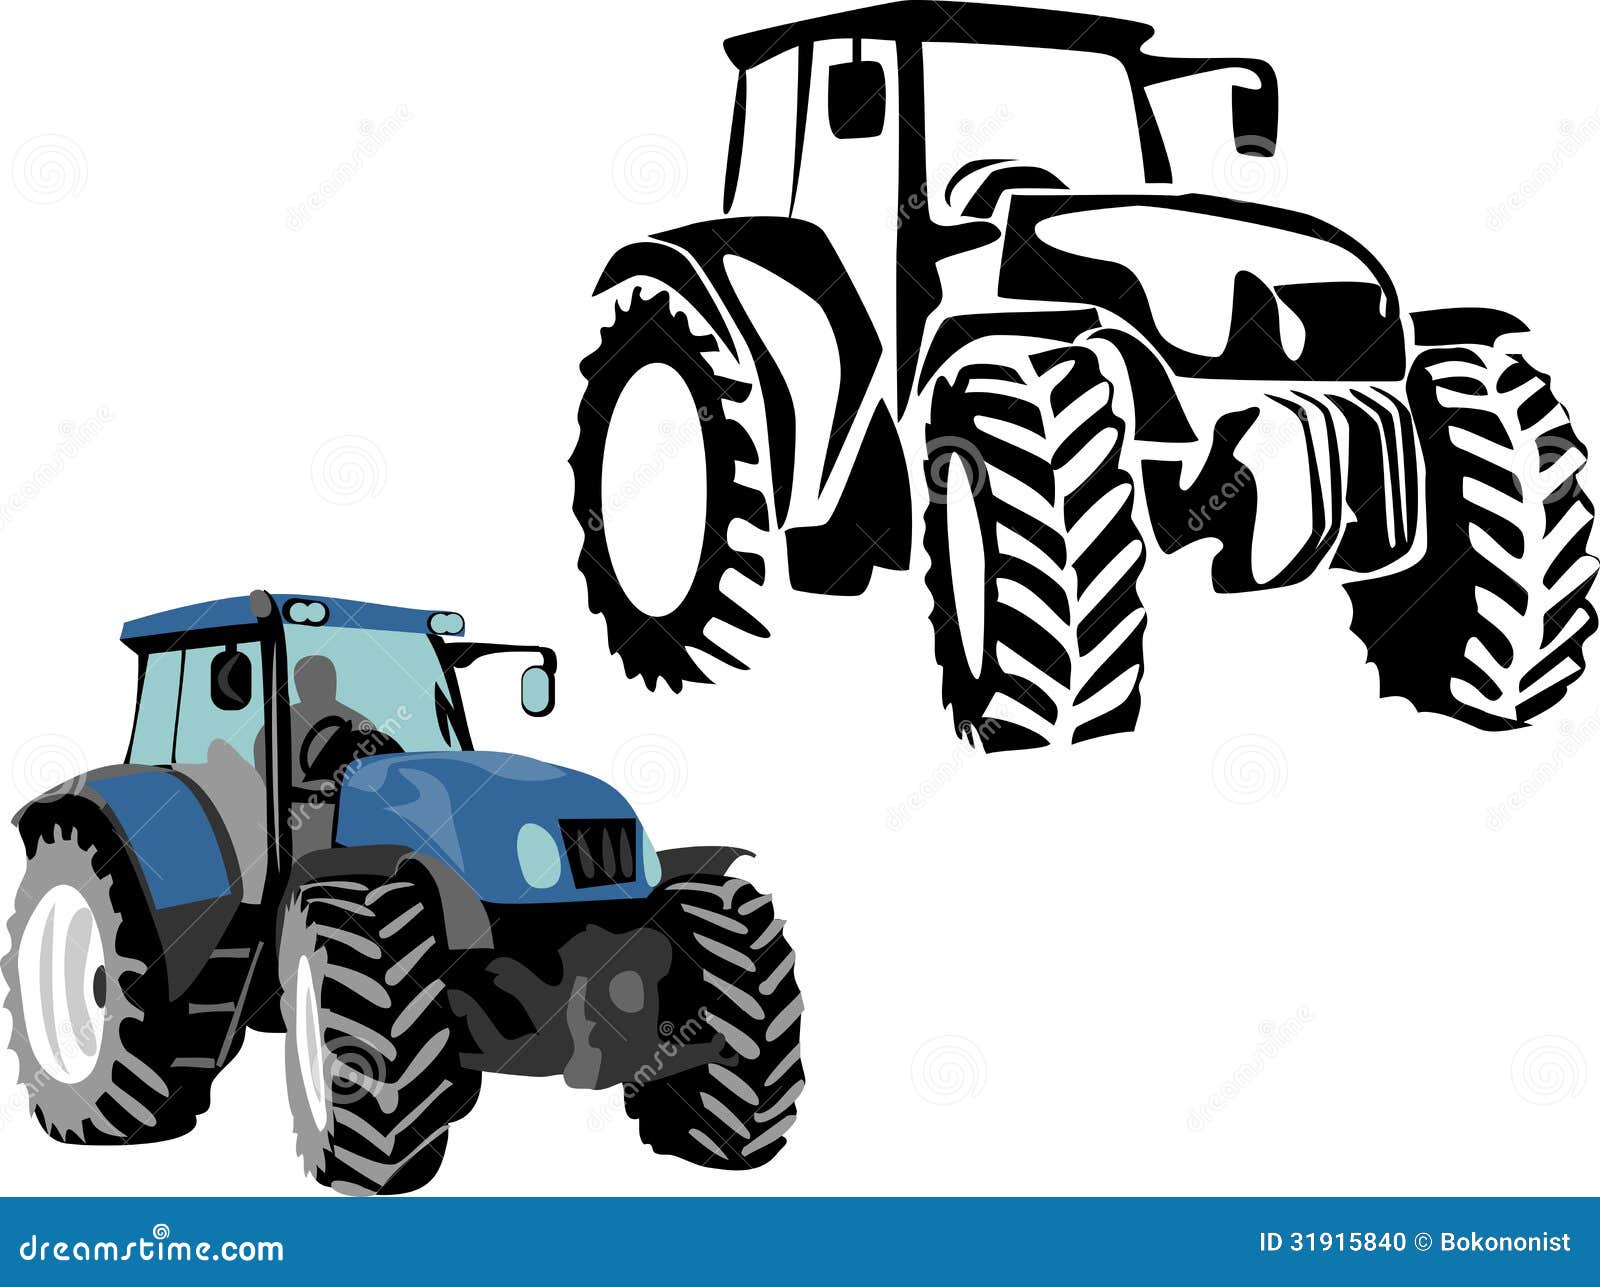 clipart kostenlos traktor - photo #43